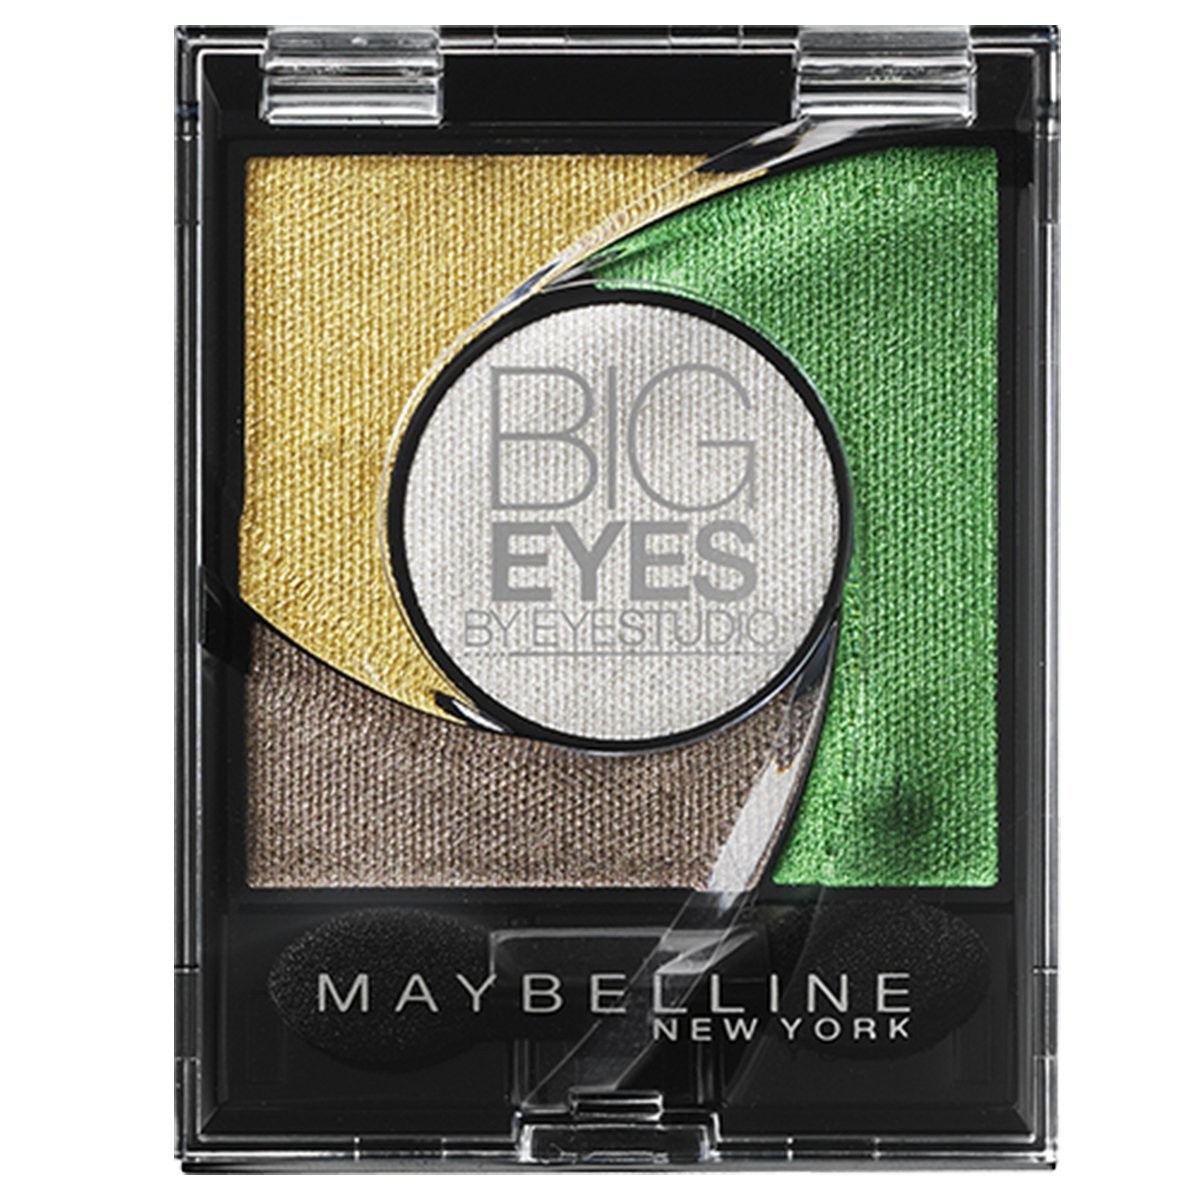 Maybelline Eyestudio Big Eyes Eye Shadow - 02 Luminous Grass